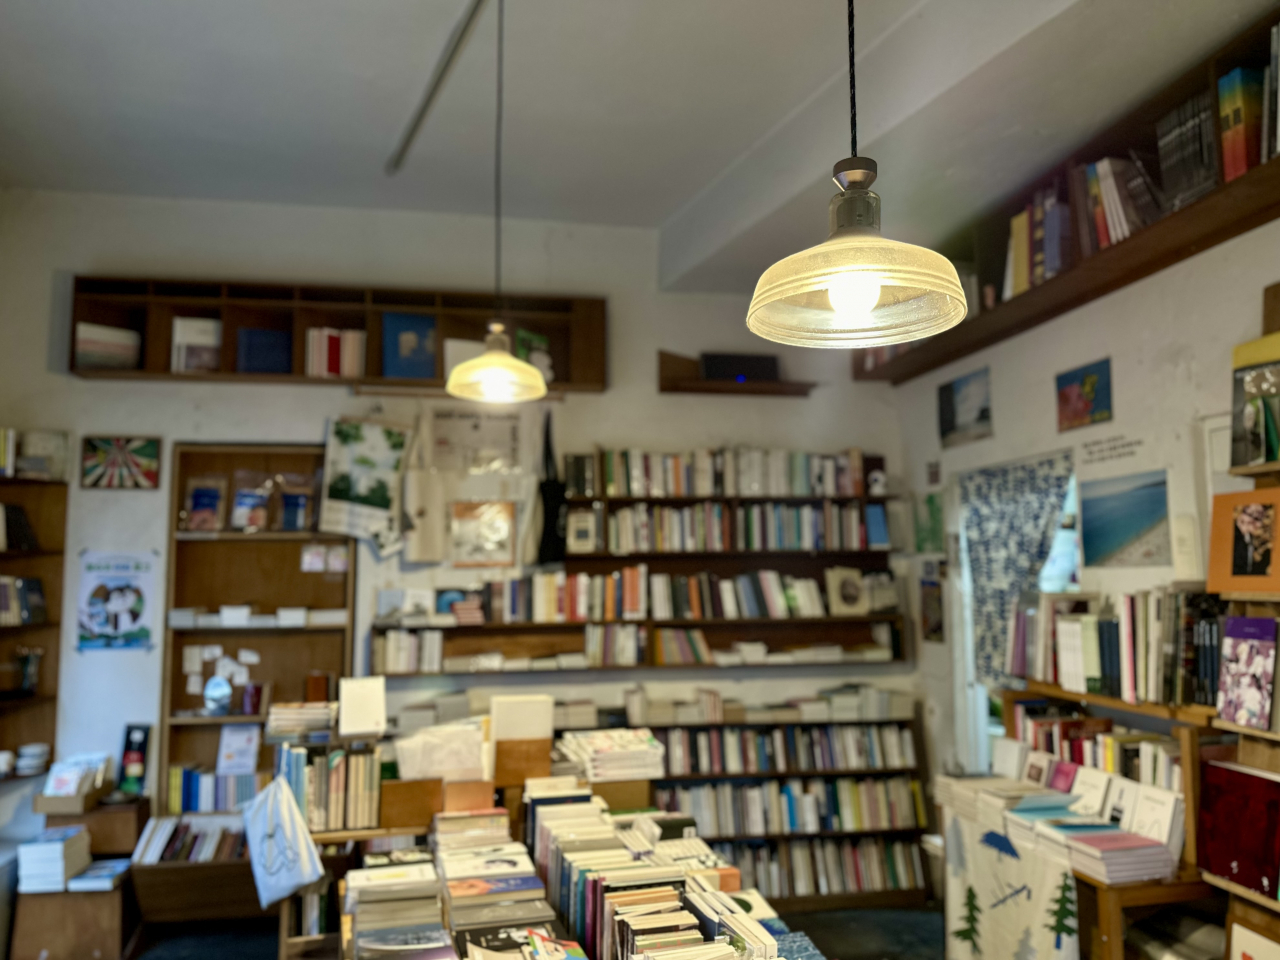 Books are displayed at Storage Book & Film, an indie bookstore located in the Haebangchon neighborhood. (Moon Joon-hyun/The Korea Herald)